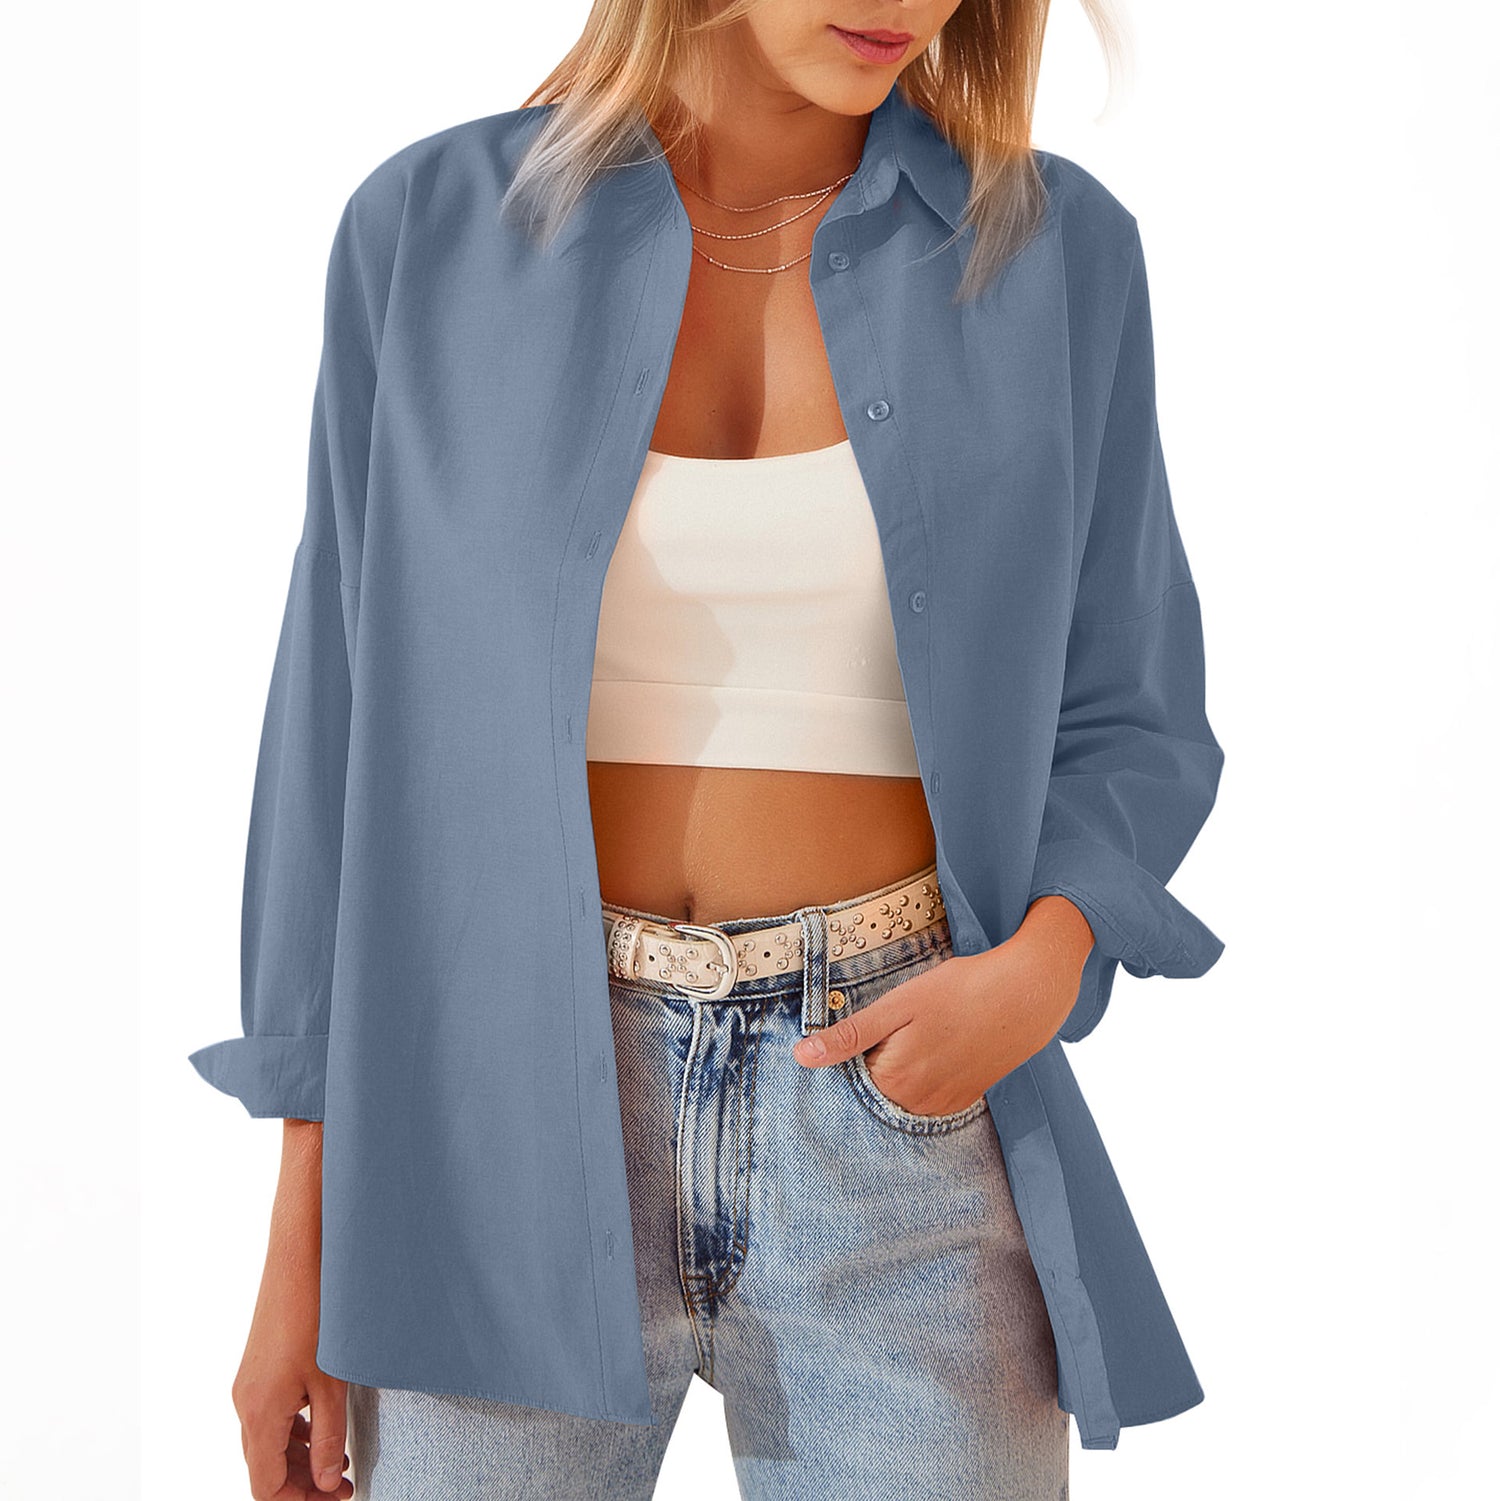 Shirt  | Women's Shirt Jacket Long Sleeve Blouse Button Down Tops Candy Color Shirt | Blue Grey |  2XL| thecurvestory.myshopify.com